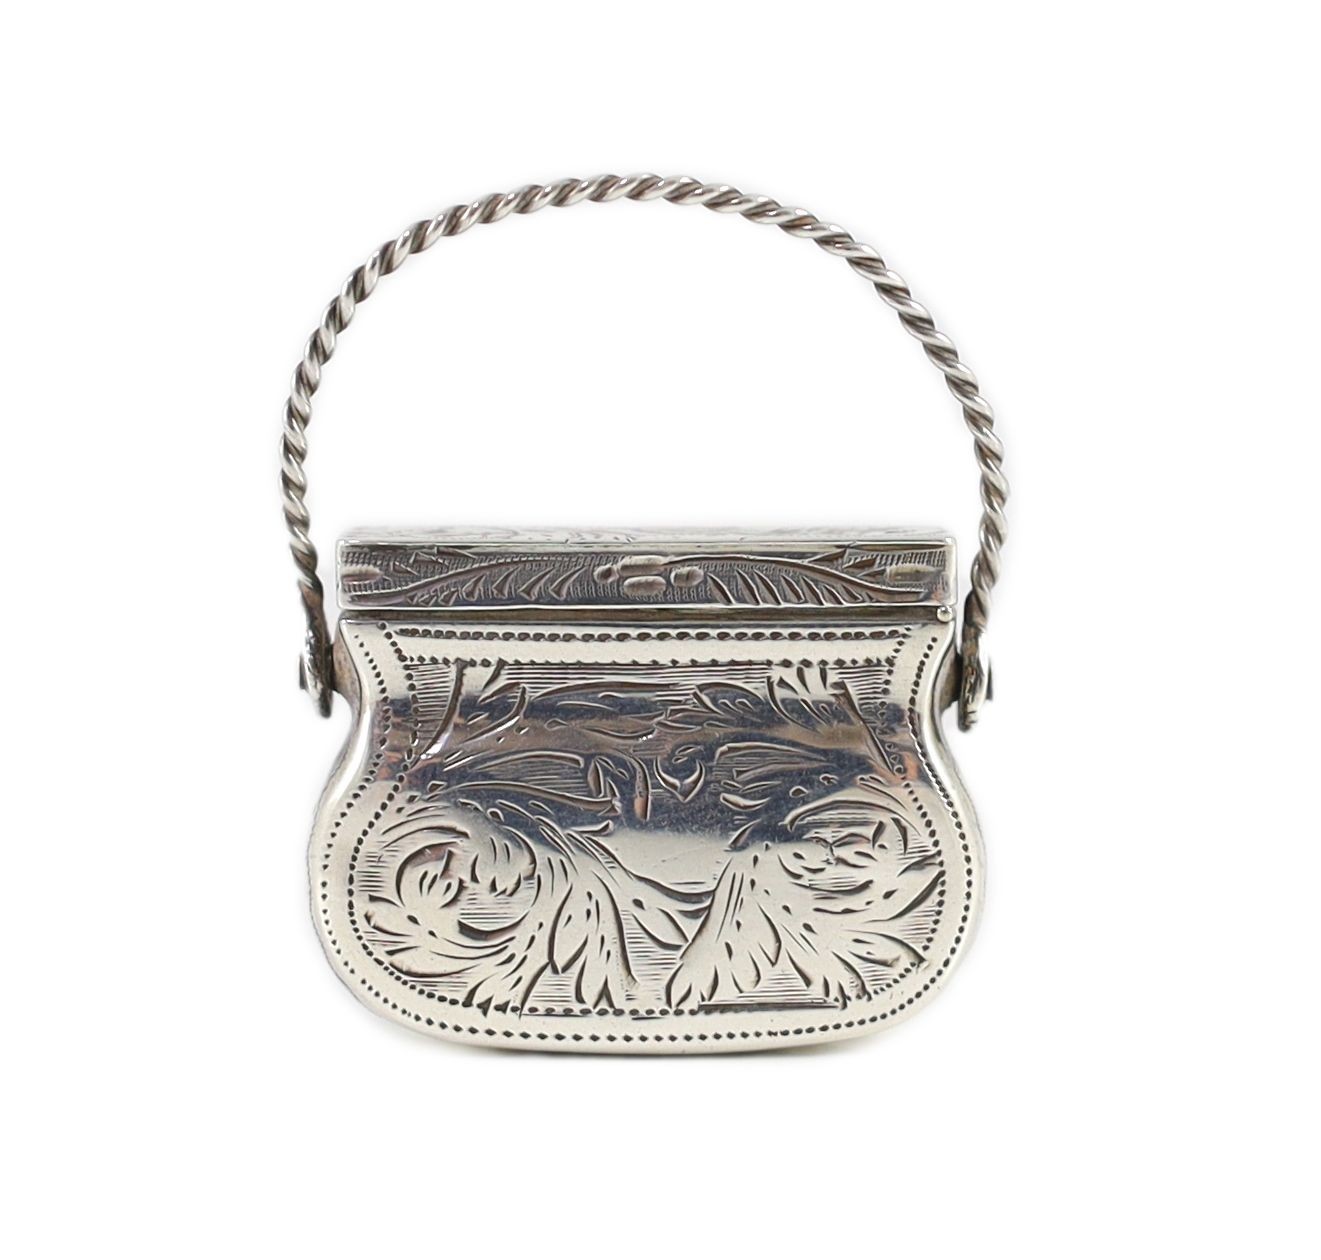 A George IV engraved silver vinaigrette, modelled as a handbag, by Gervase Wheeler